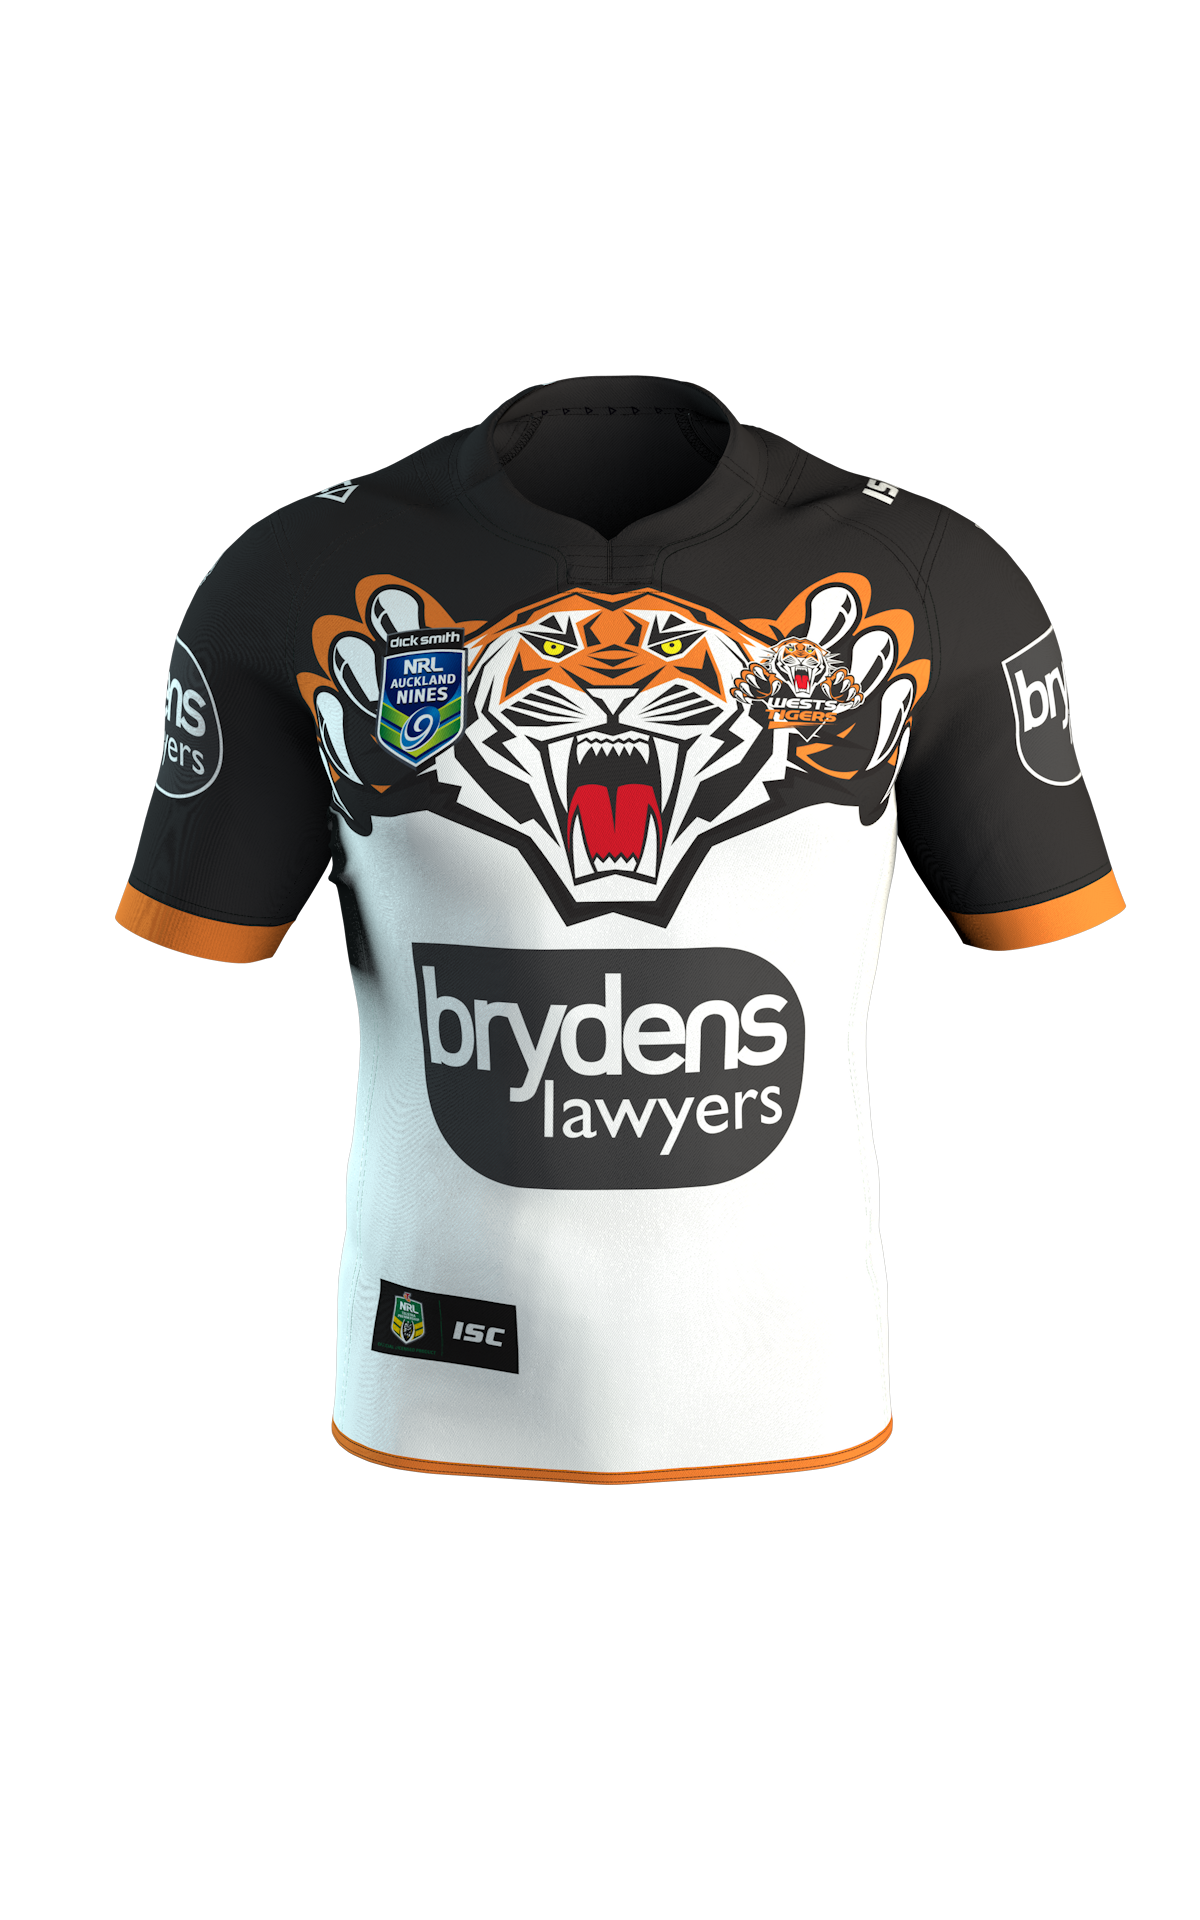 2016 tigers jersey